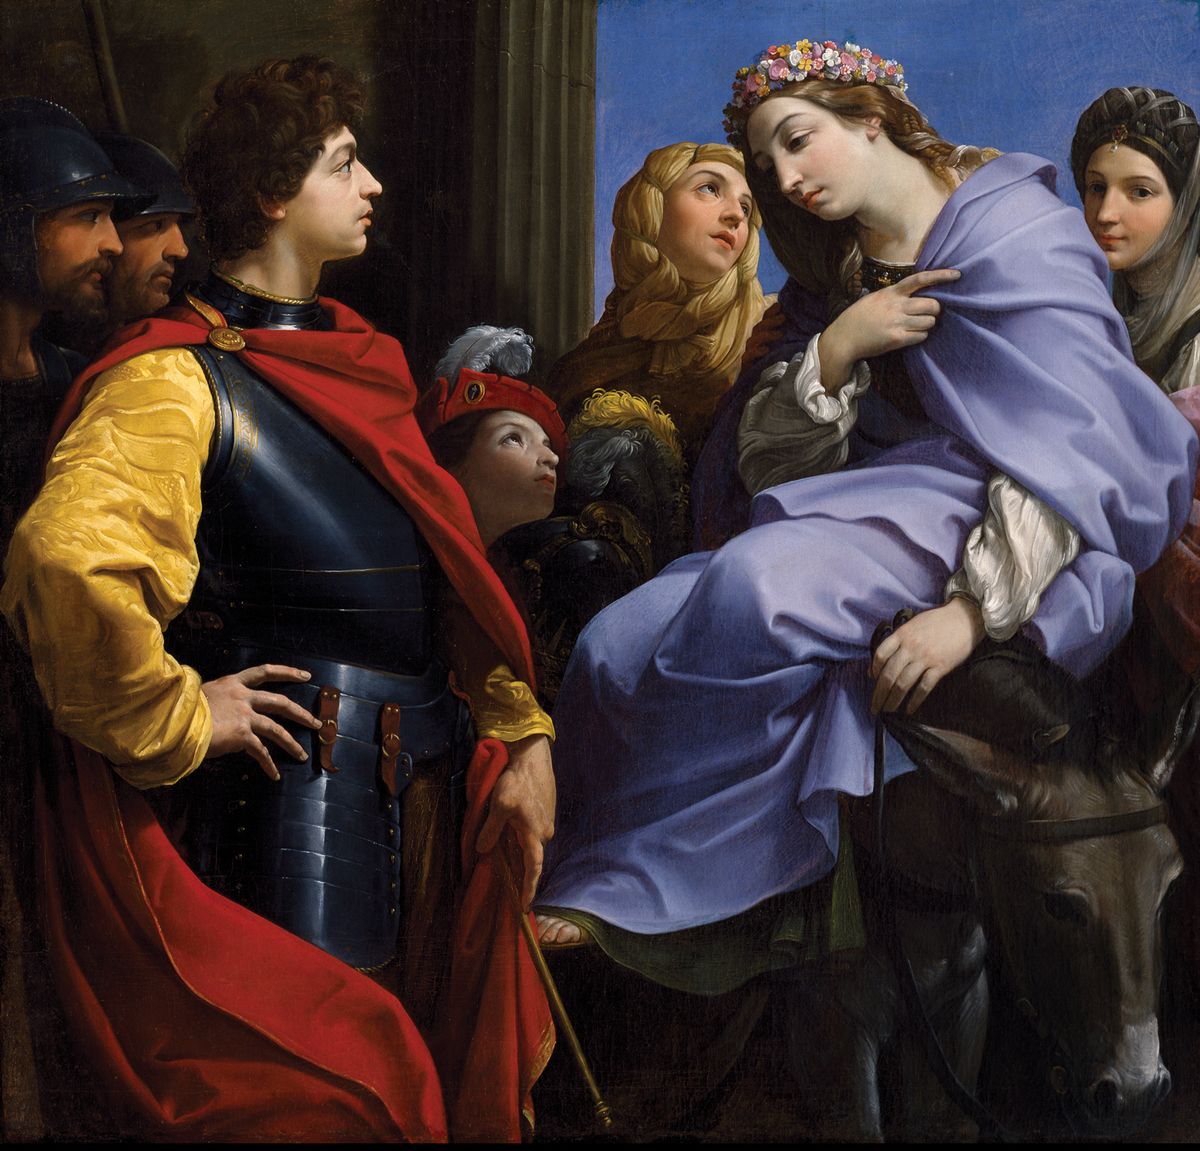 Guido Reni's The Meeting of David and Abigail (around 1615-20) 